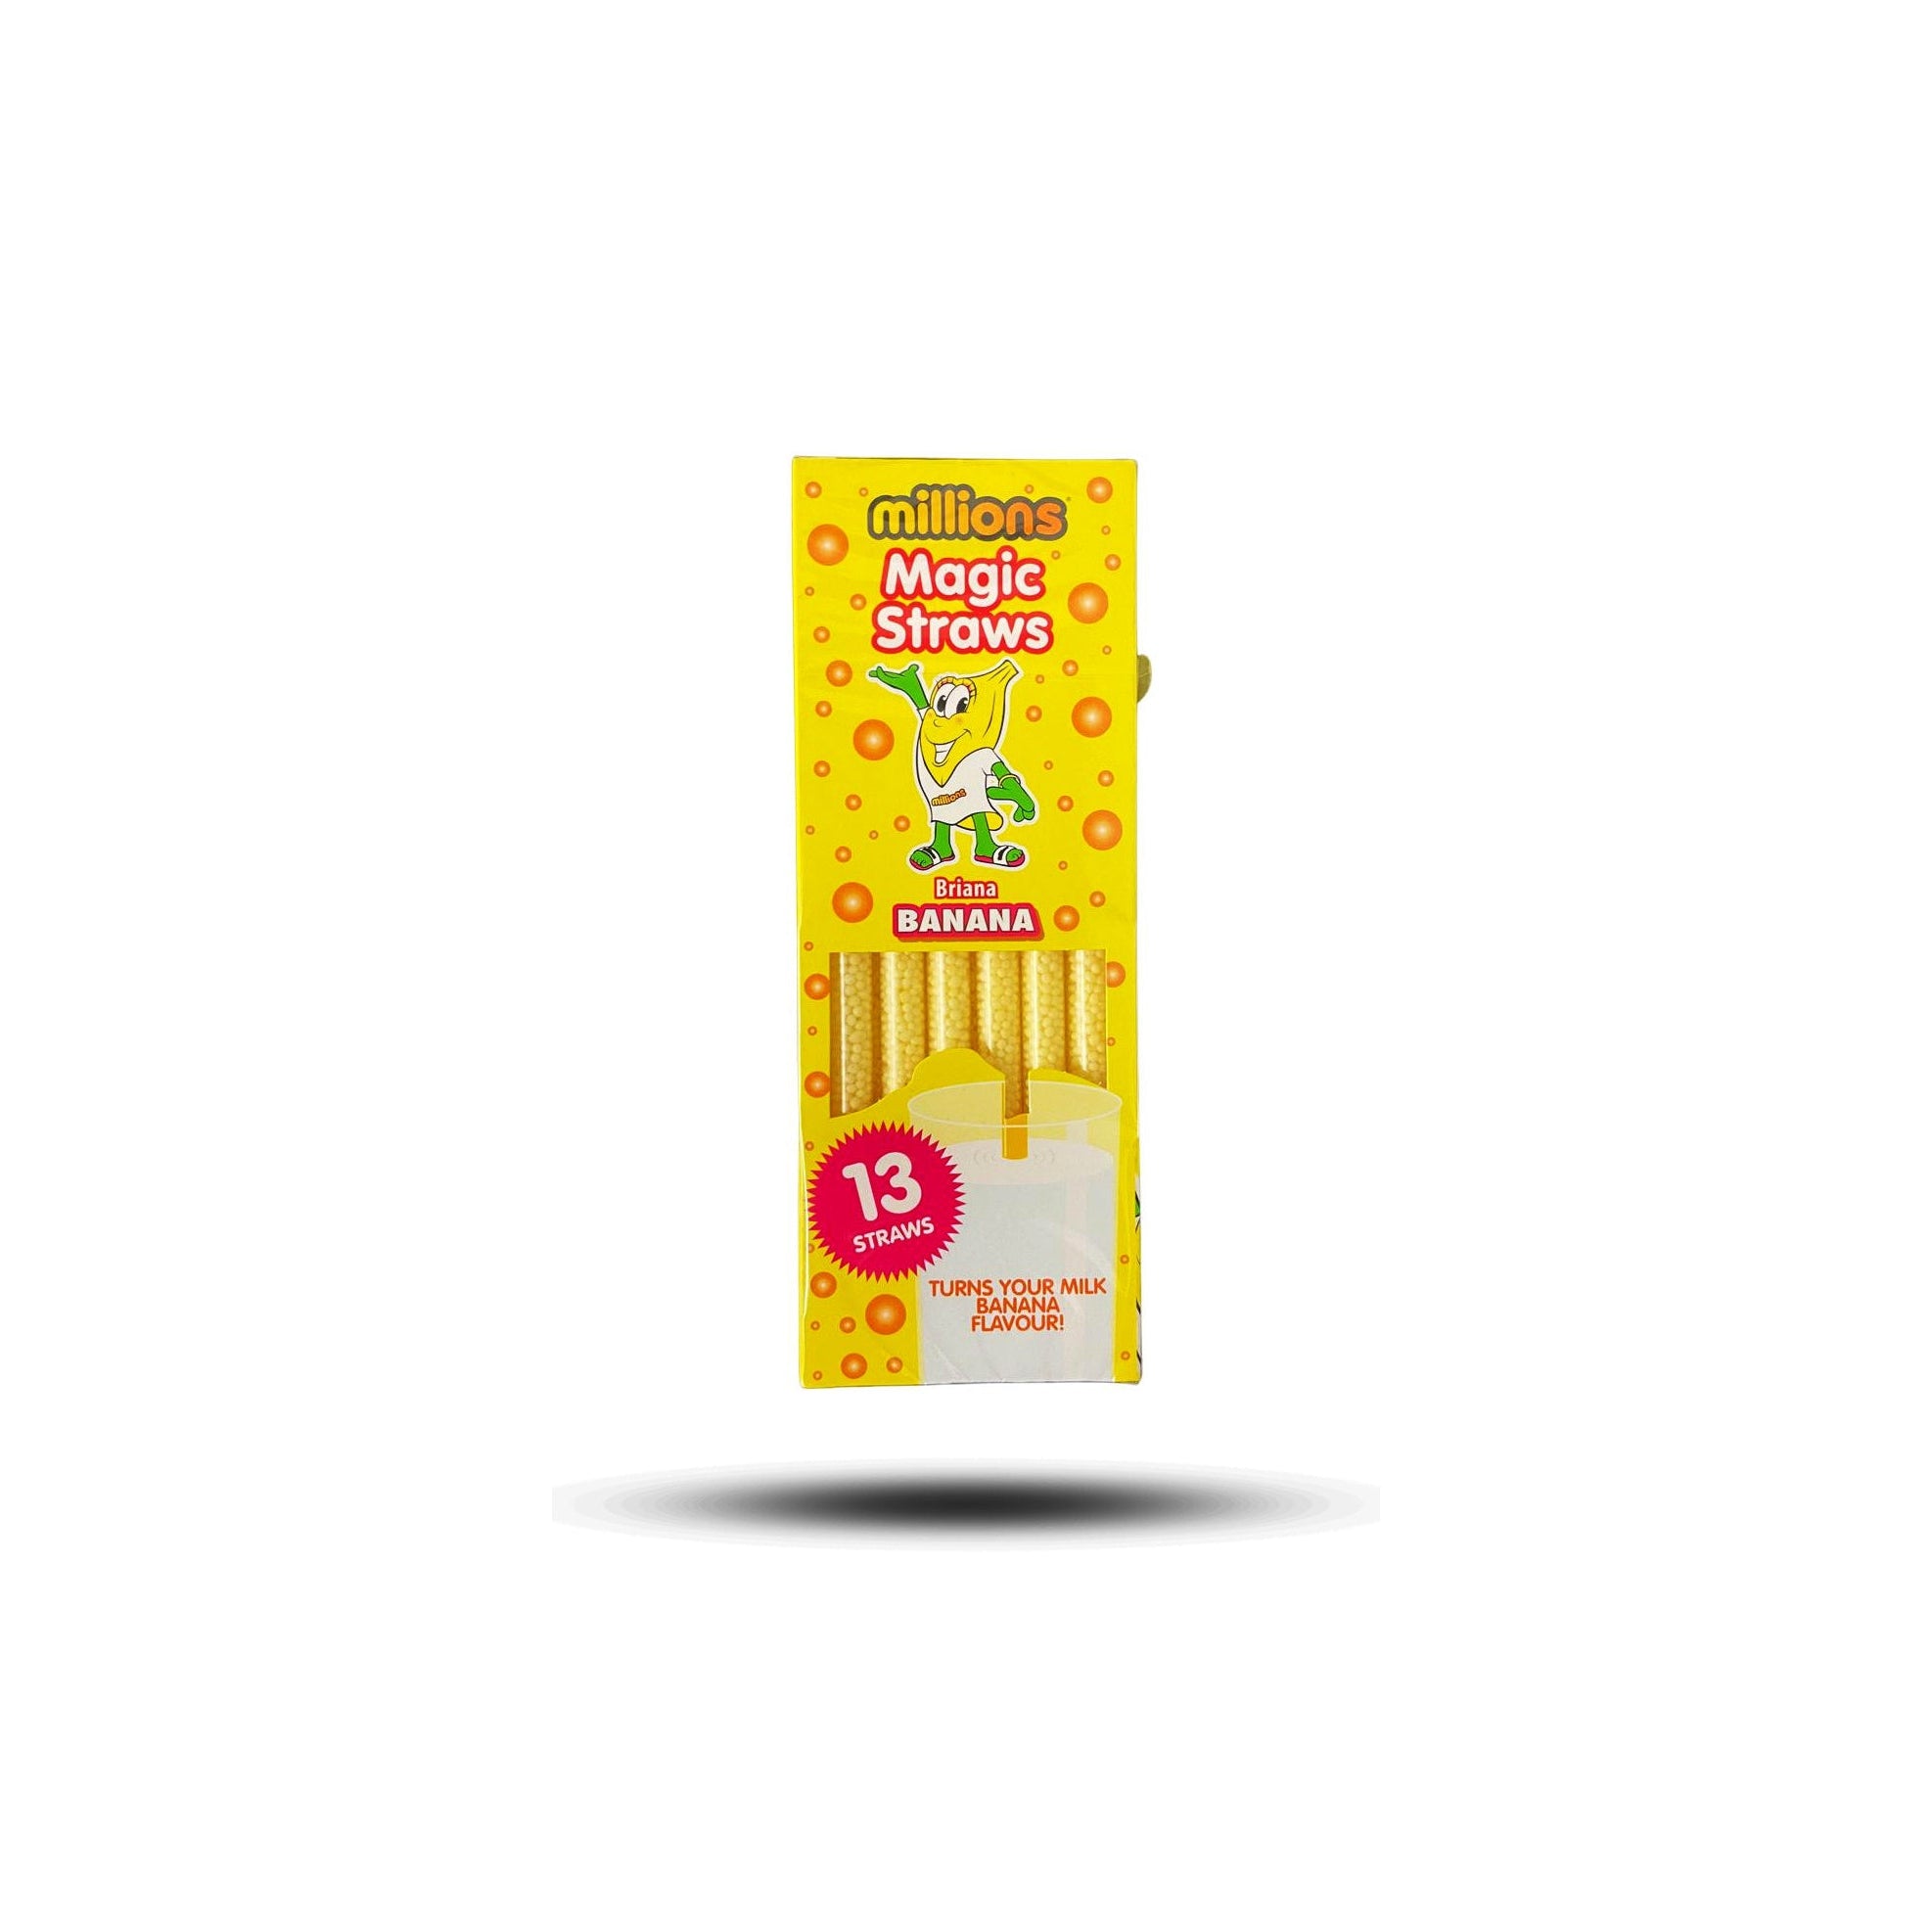 Millions Magic Straws - Briana Banana (13x6g) 78g-Golden Casket (Greenock) Ltd.-SNACK SHOP AUSTRIA